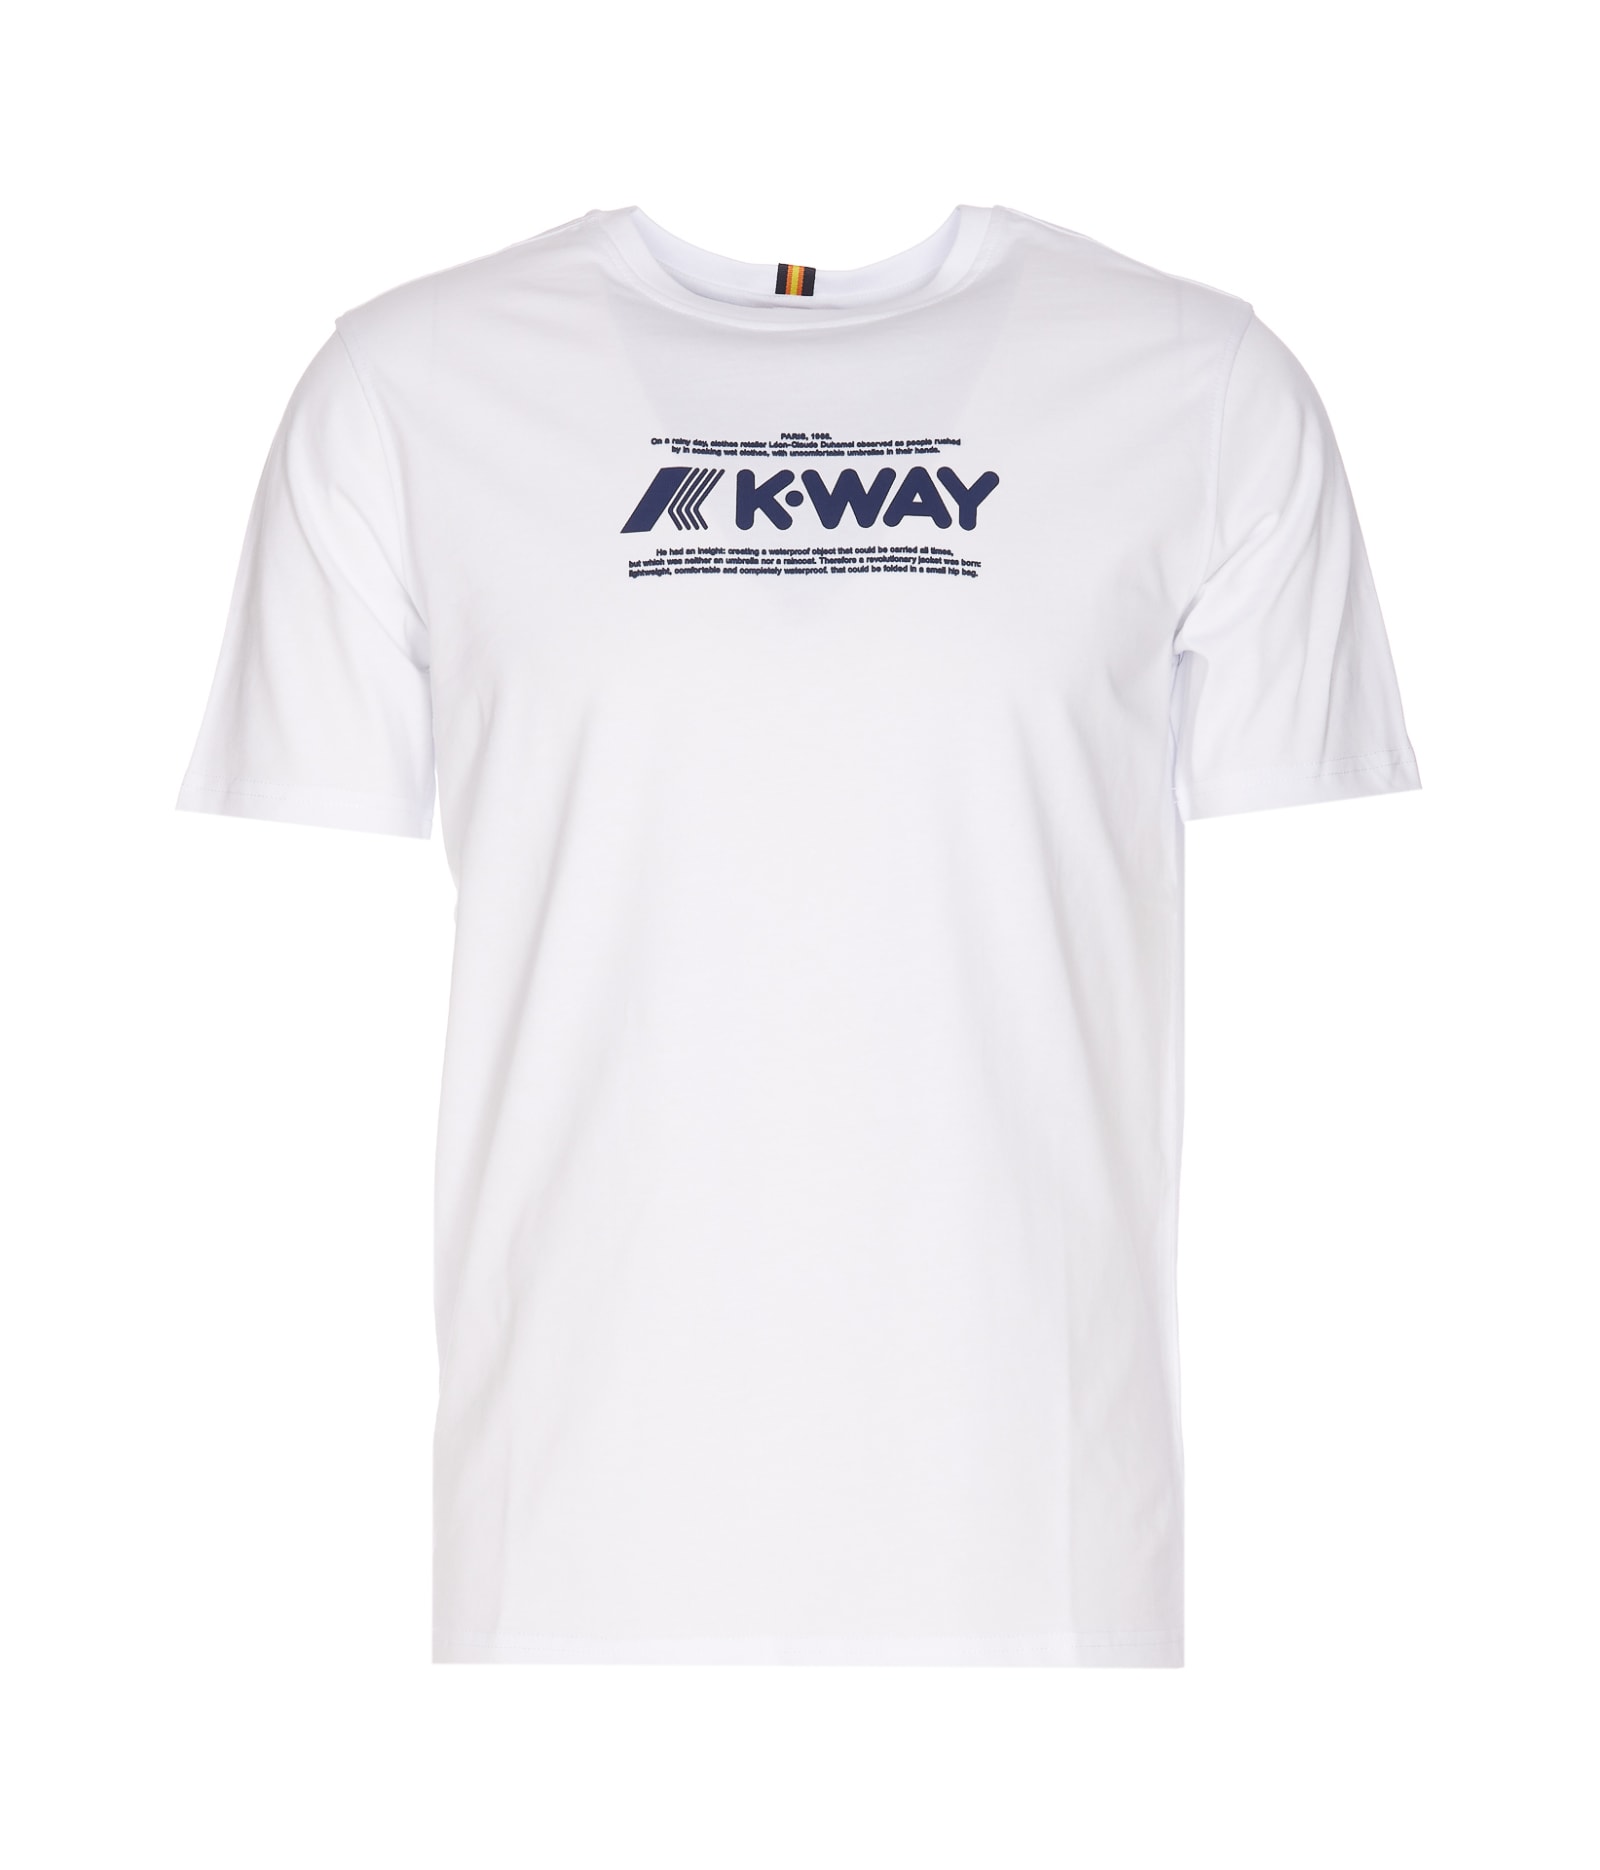 K-way Odom Typo Logo T-shirt In White